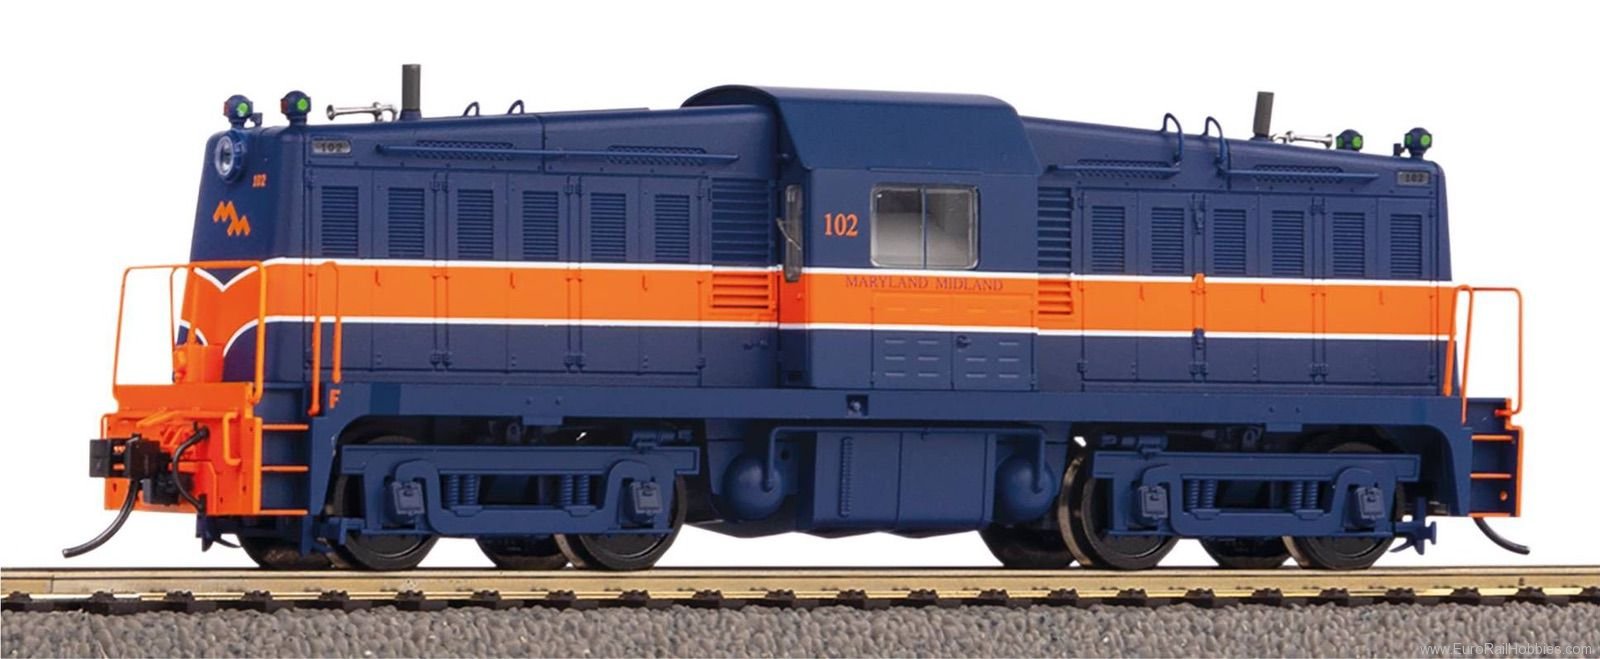 Piko 52468 Diesel Locomotive MMID 65-Ton 102 (Piko Exper